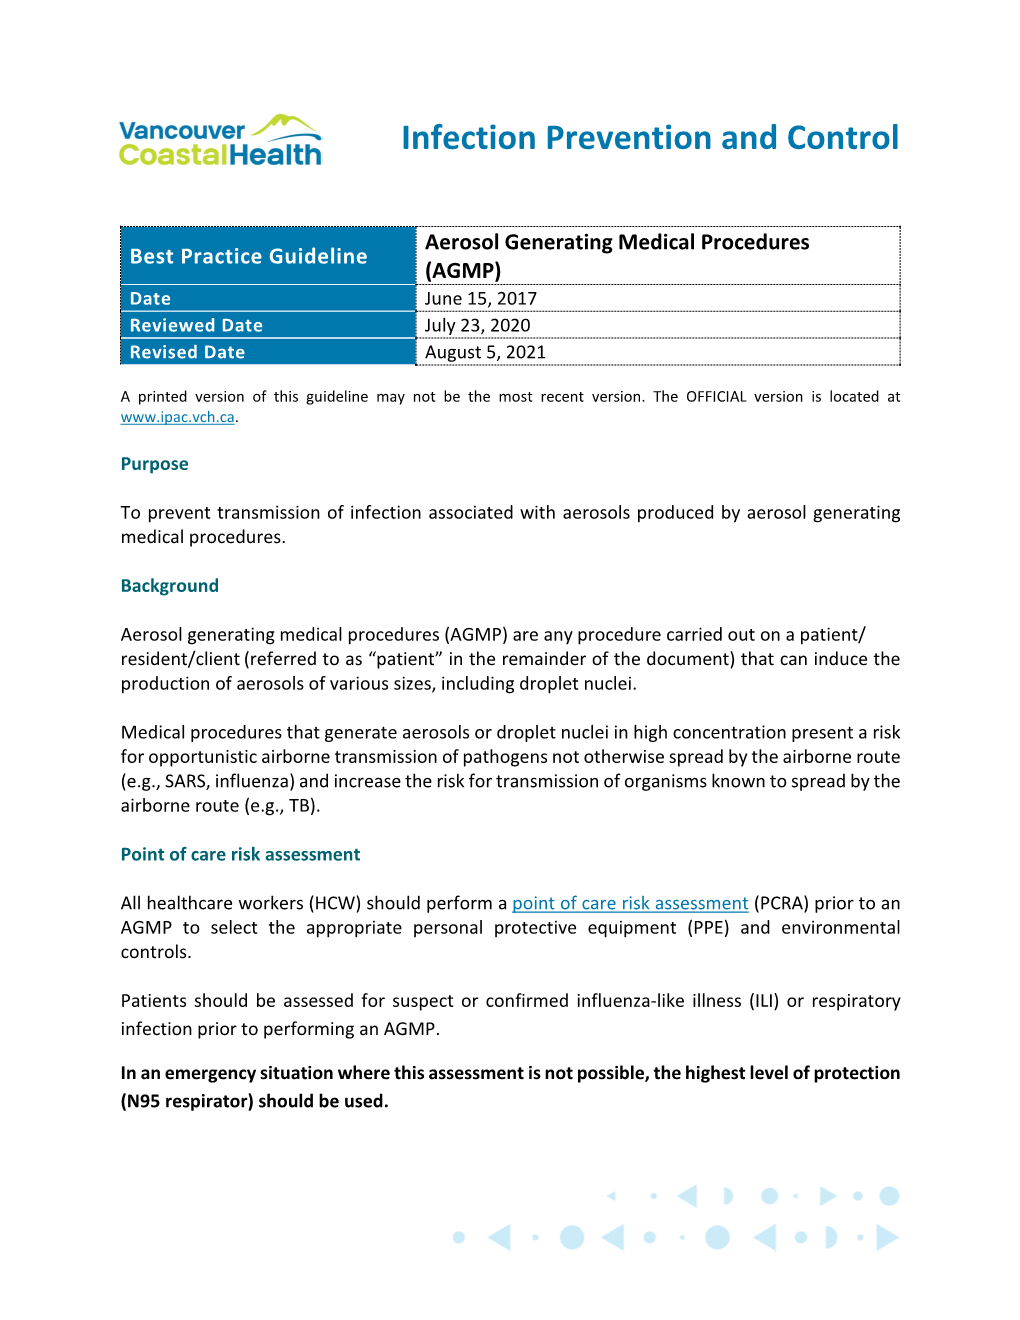 Aerosol Generating Medical Procedures Best Practice Guideline (AGMP) Date June 15, 2017 Reviewed Date July 23, 2020 Revised Date August 5, 2021